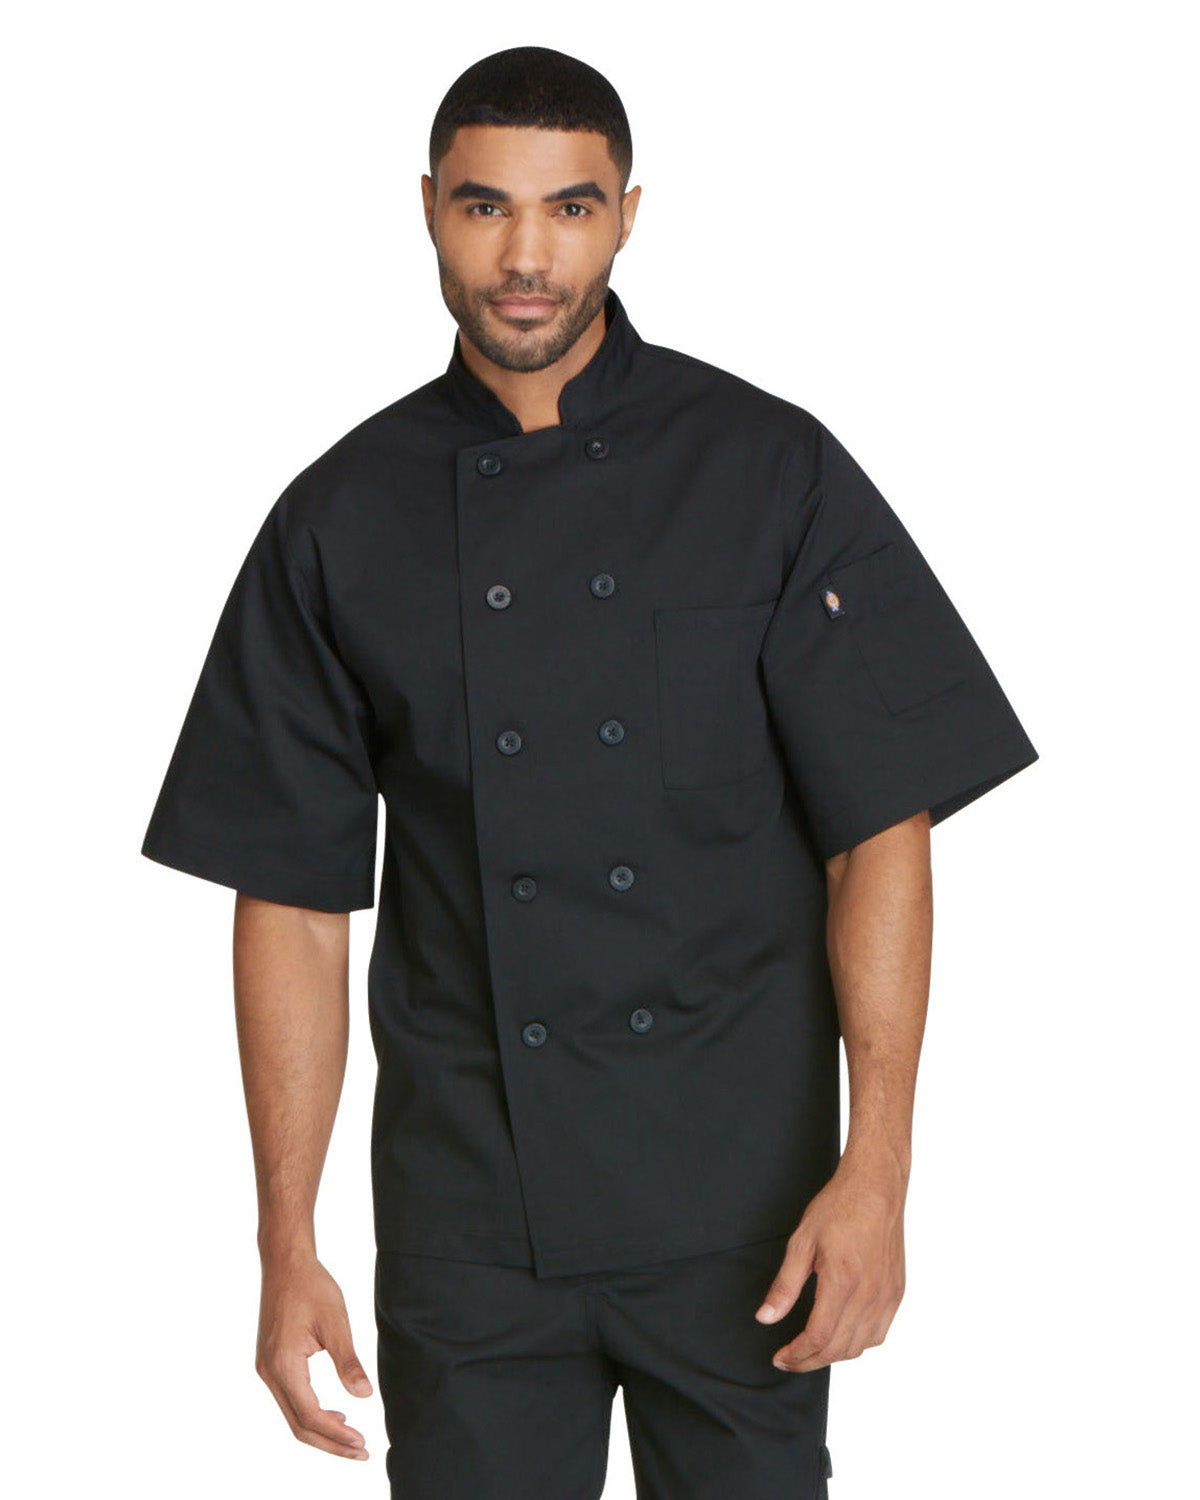 Dickies Chef Unisex Cool Breeze Coat